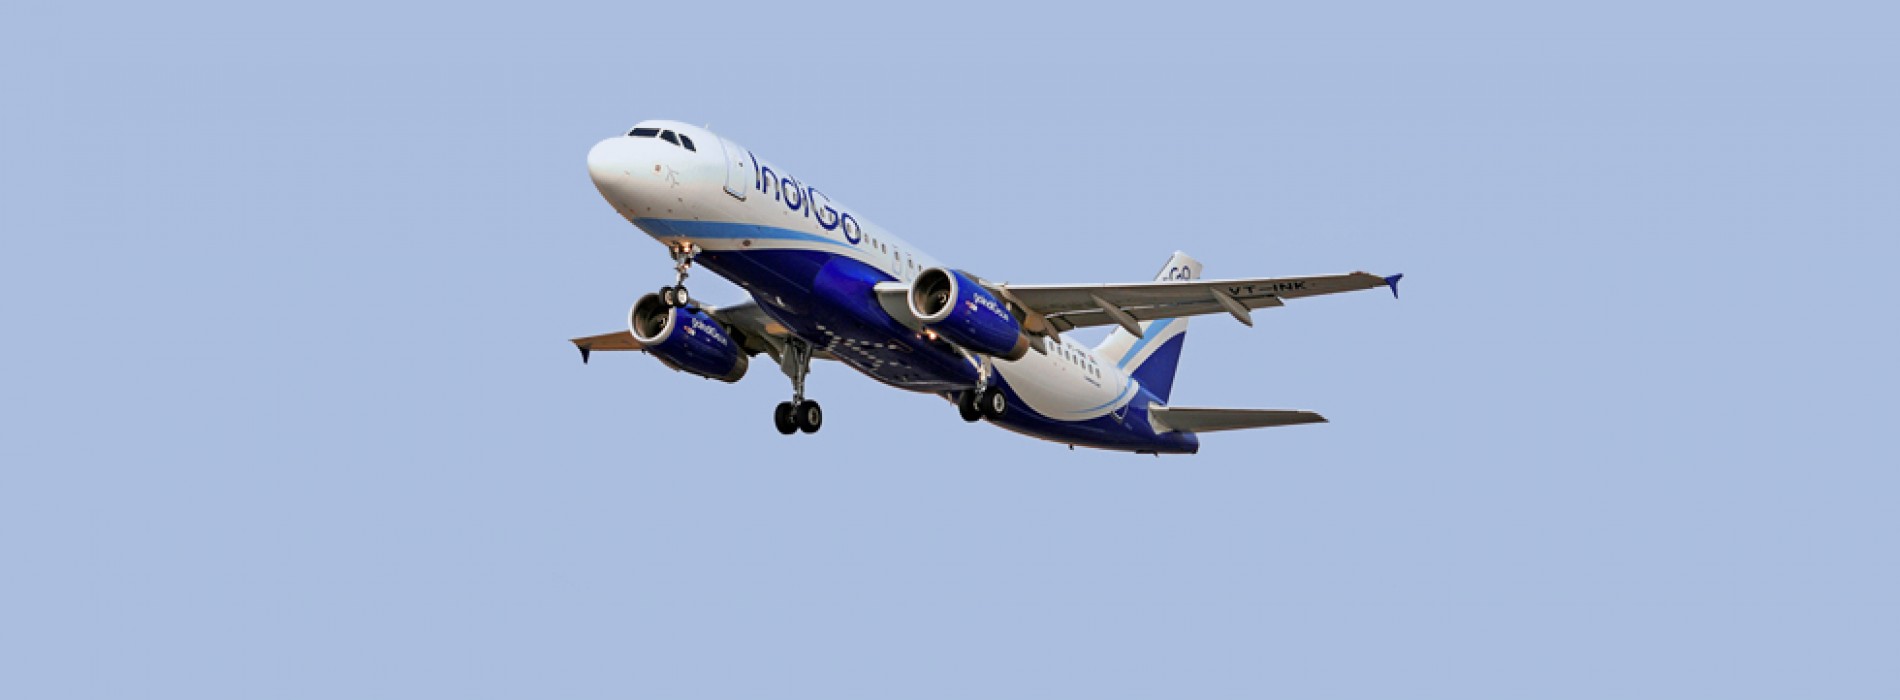 IndiGo offering flight tickets below INR 1000 for select flight routes